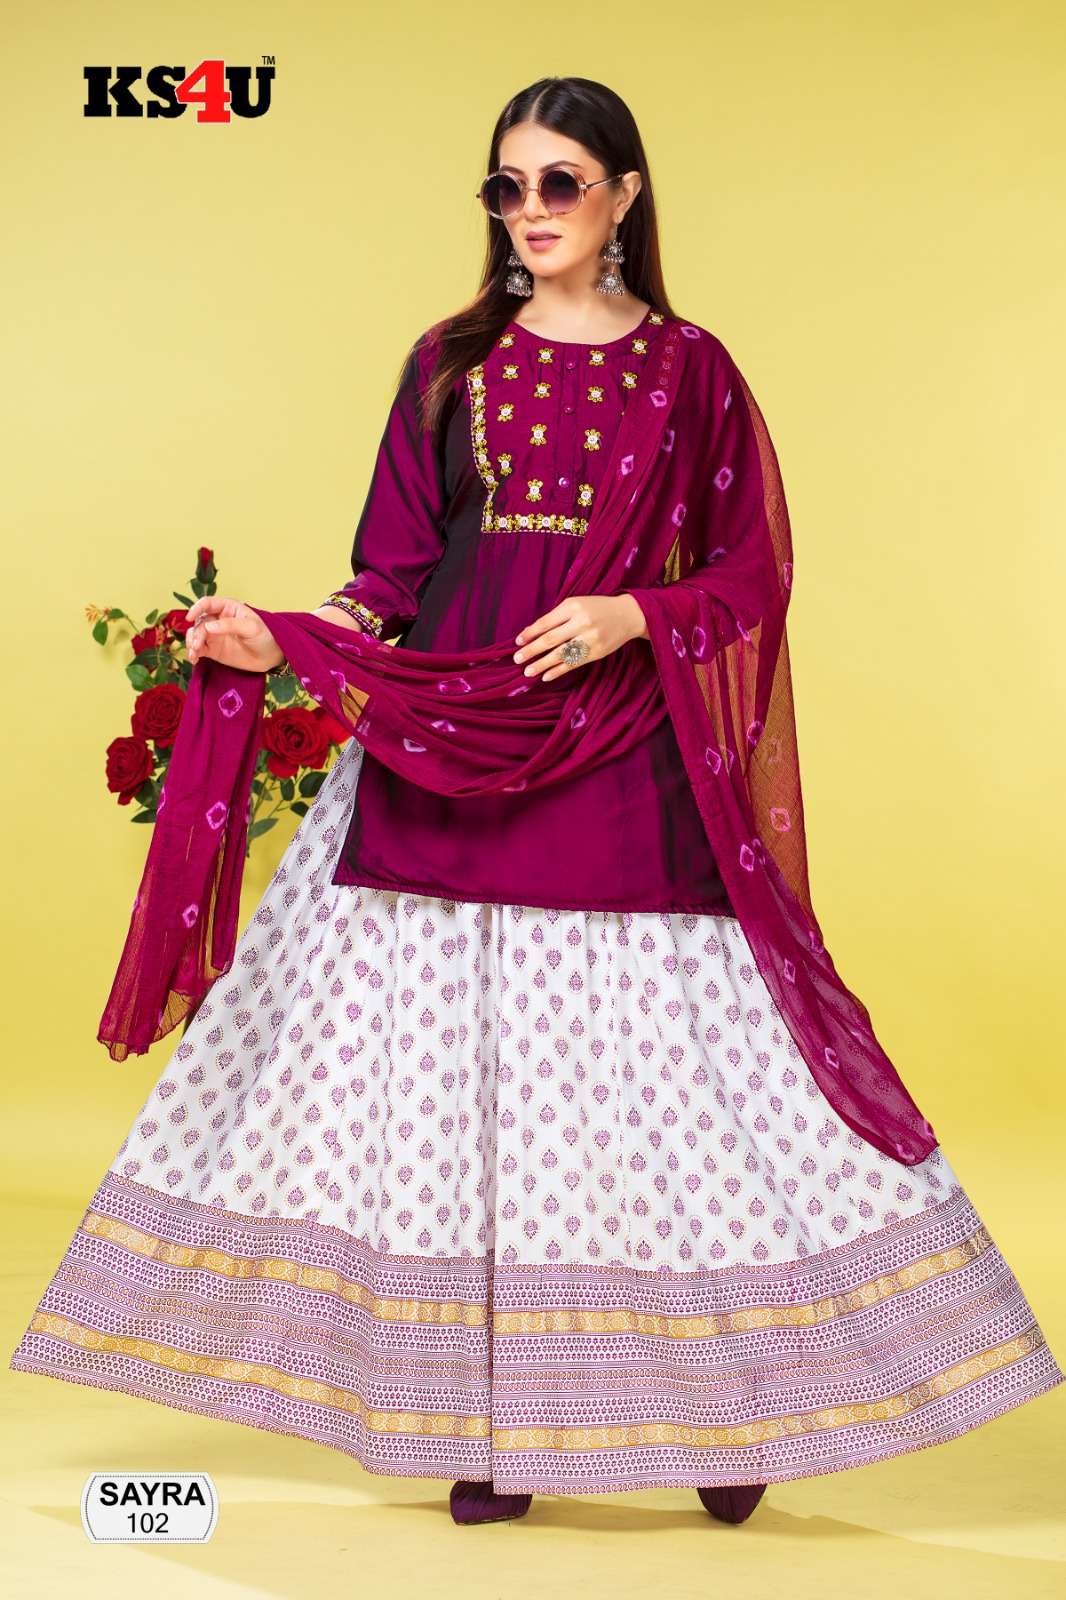 sayra ks4u skirt series designer fancy skirt set at wholesaler price surat india gujarat